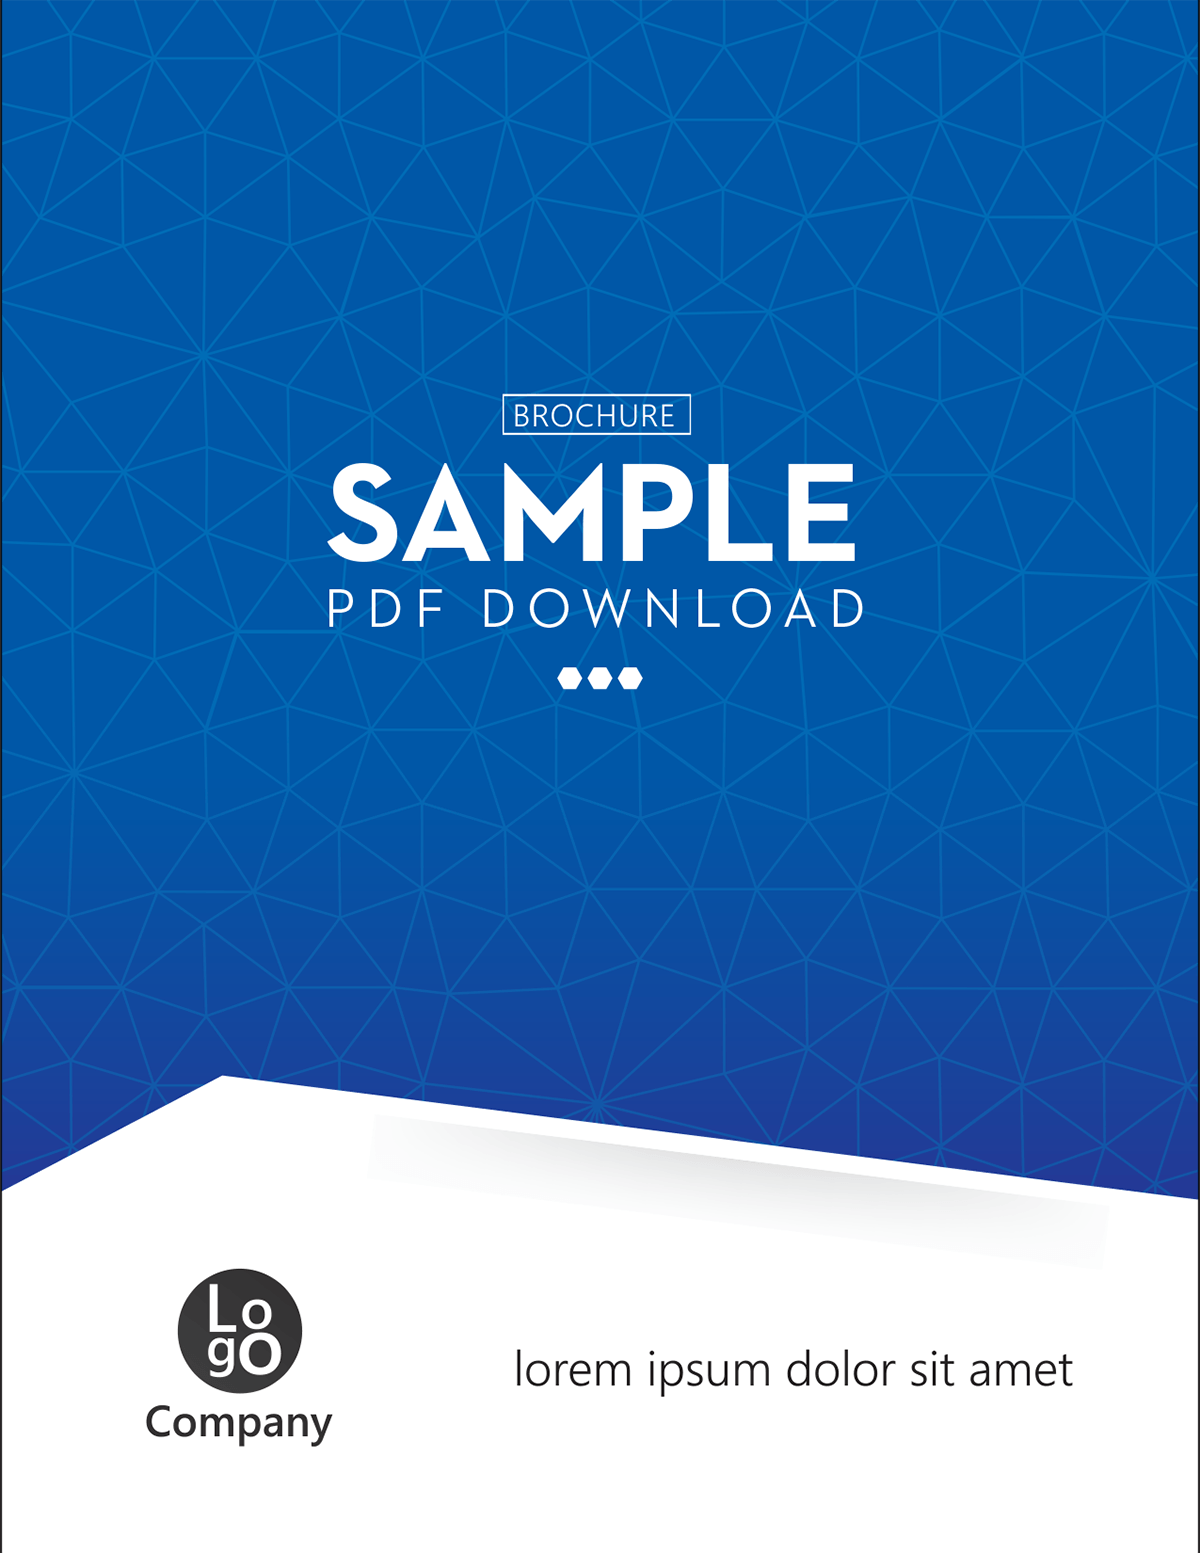 demo_pdf_download-1